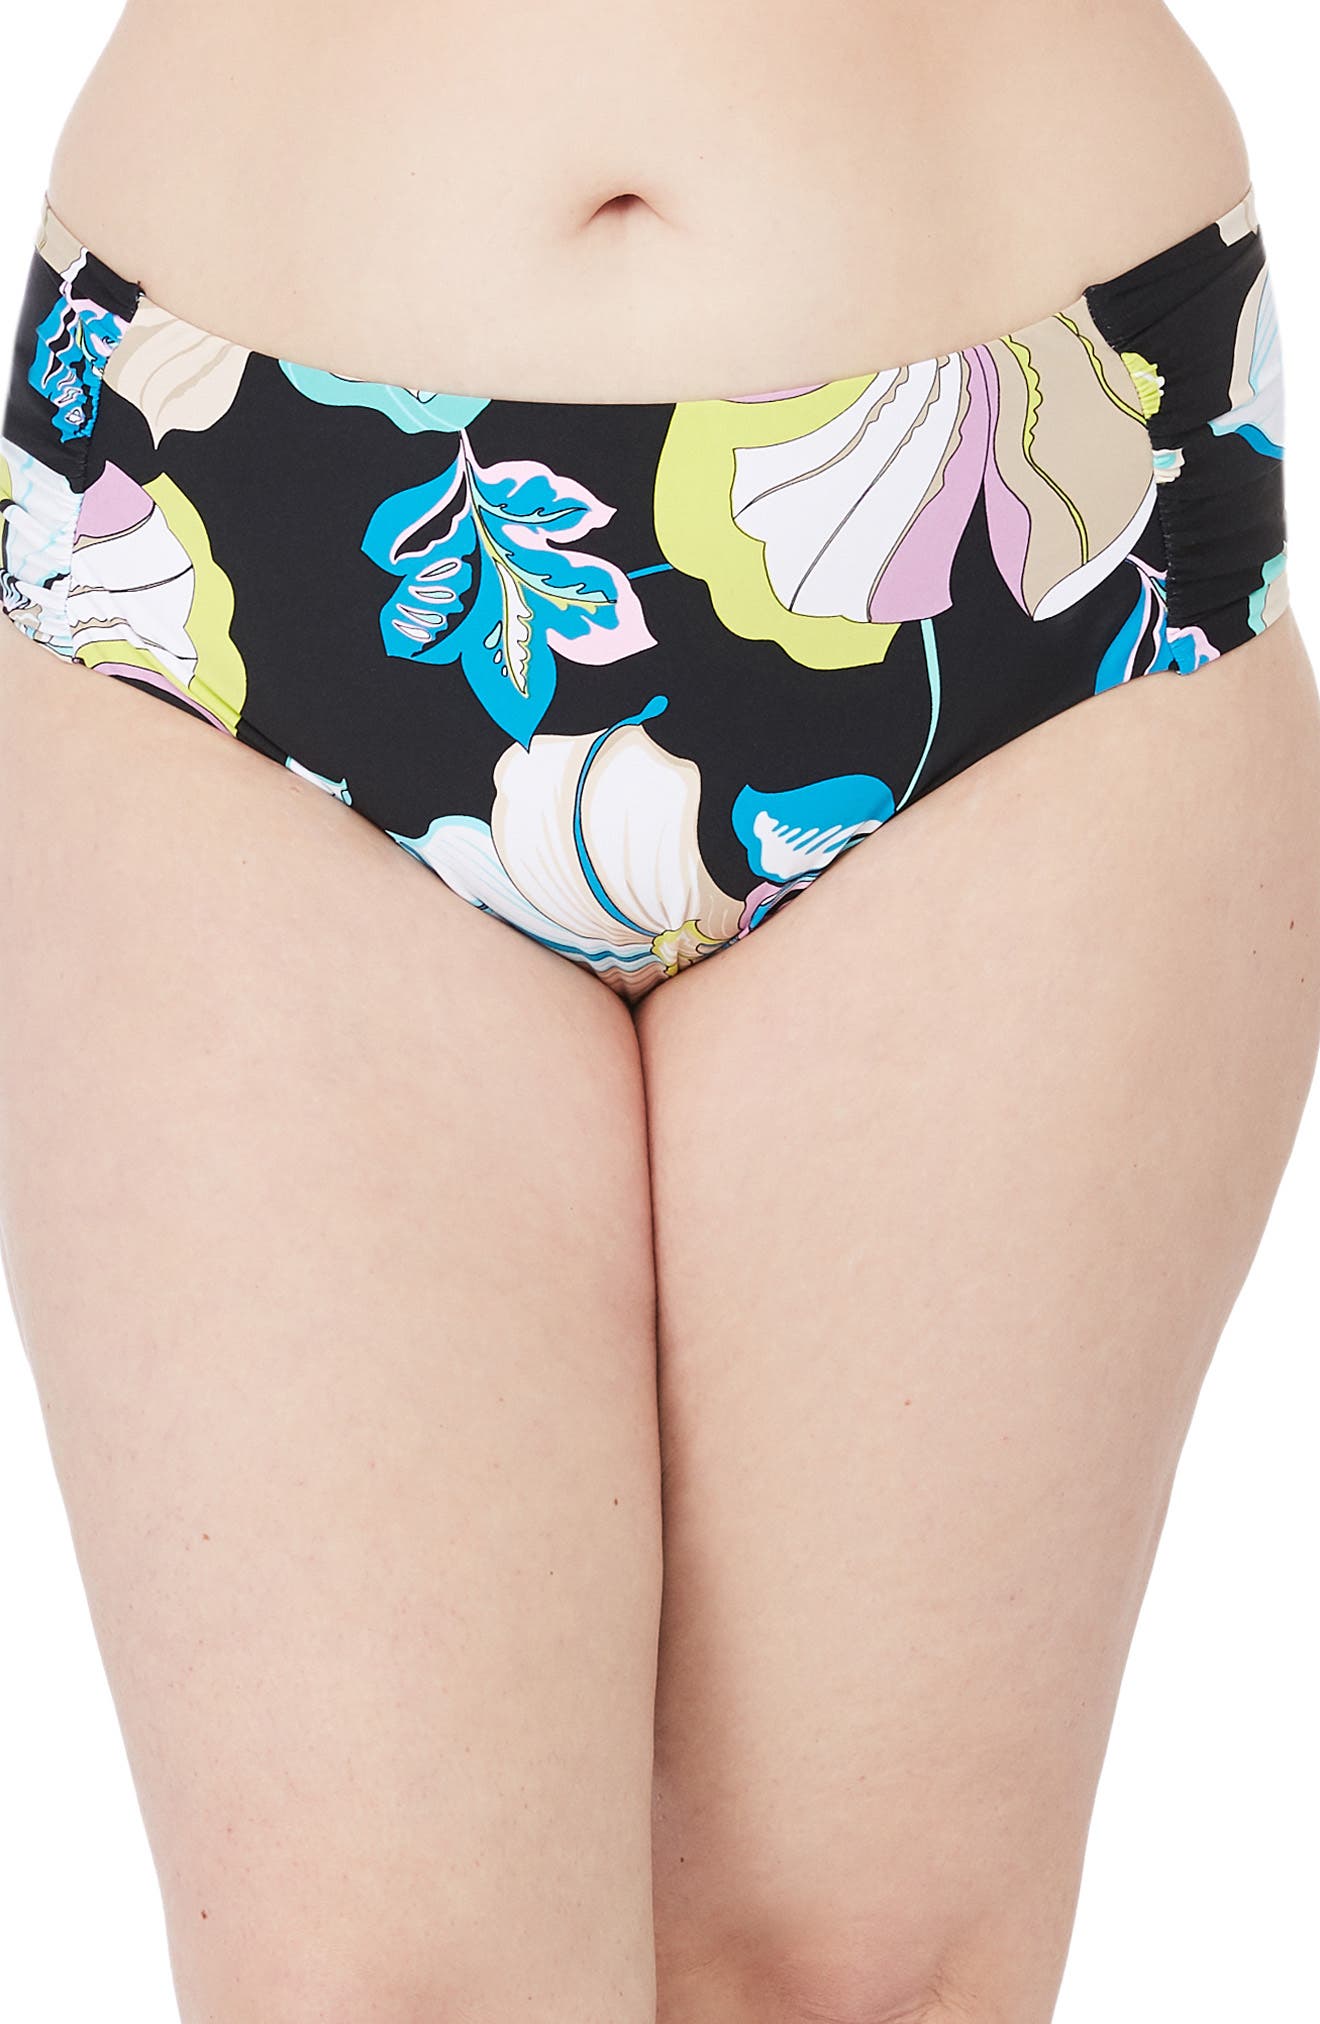 $148 Trina Turk Brasilia Molded Cup Bandeau Top & Shirred Bottom Swim Bikini Set